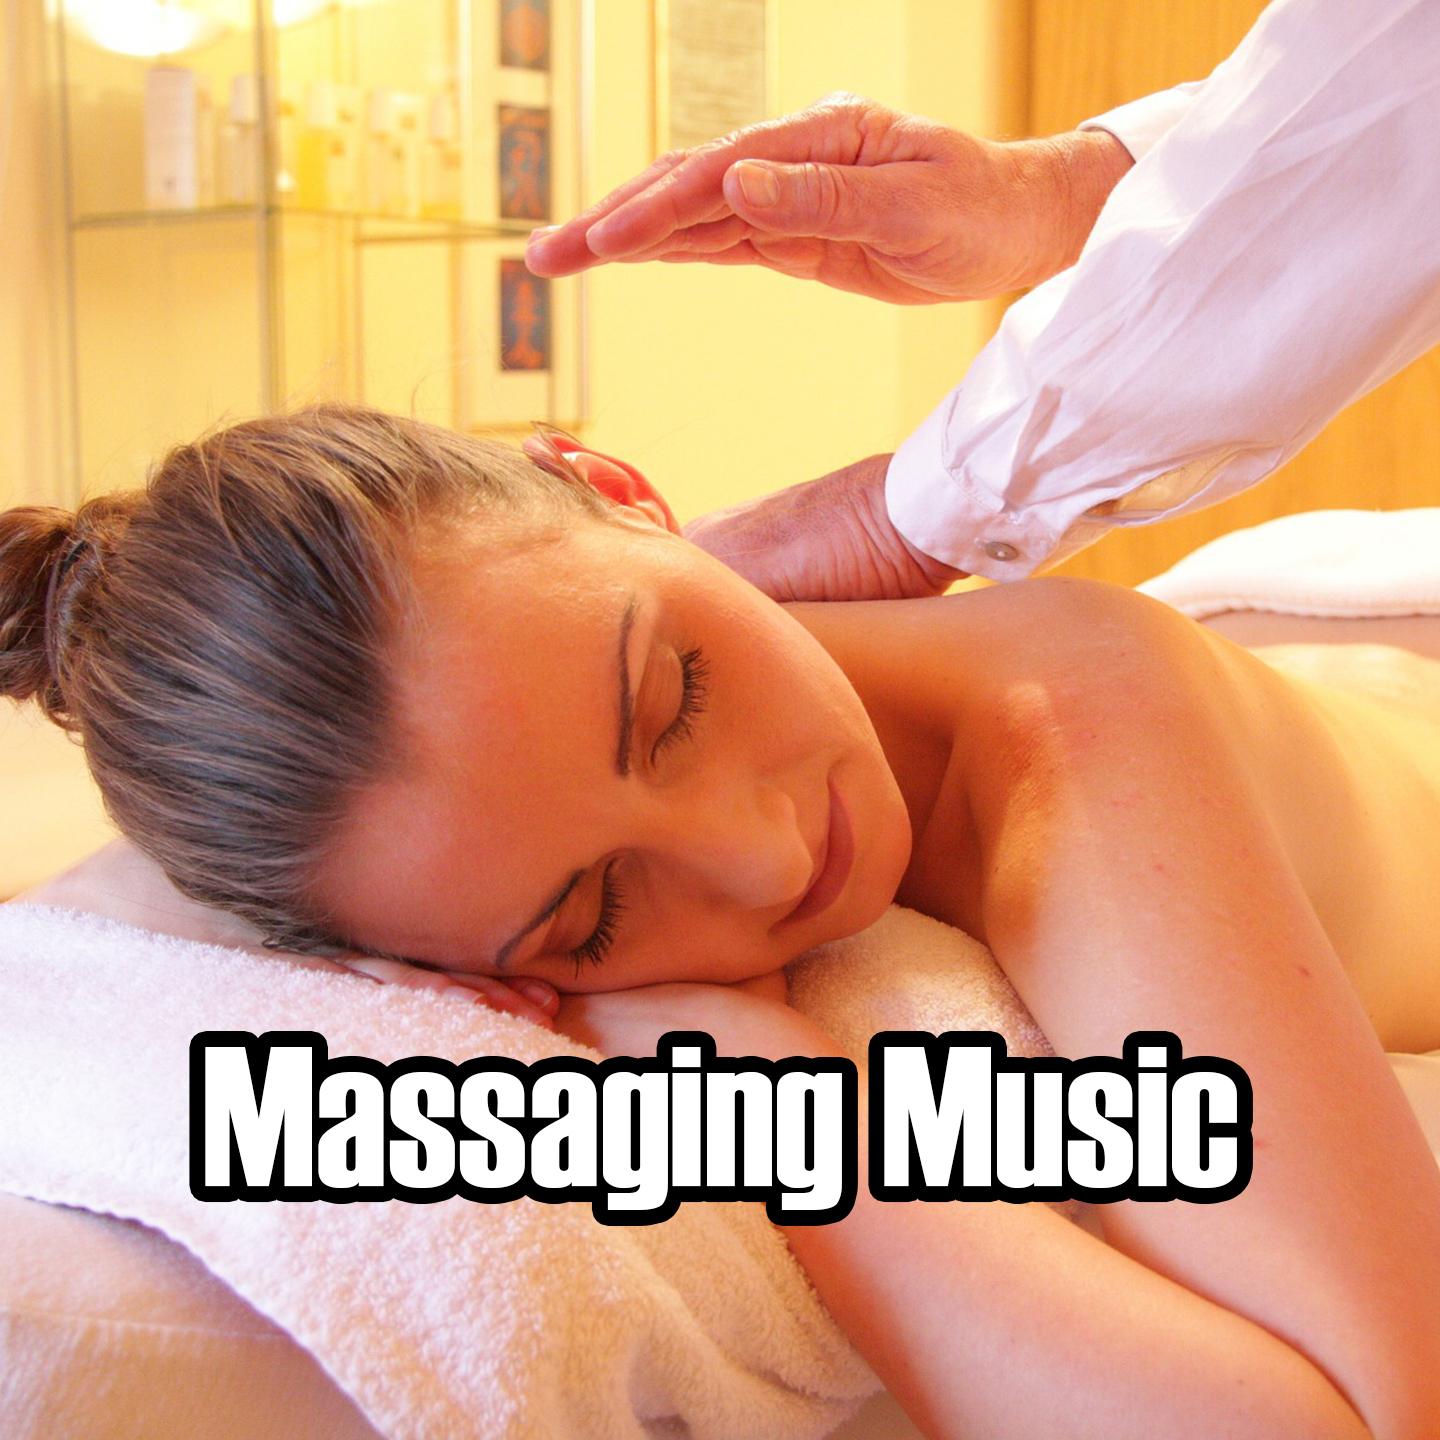 Massaging Music